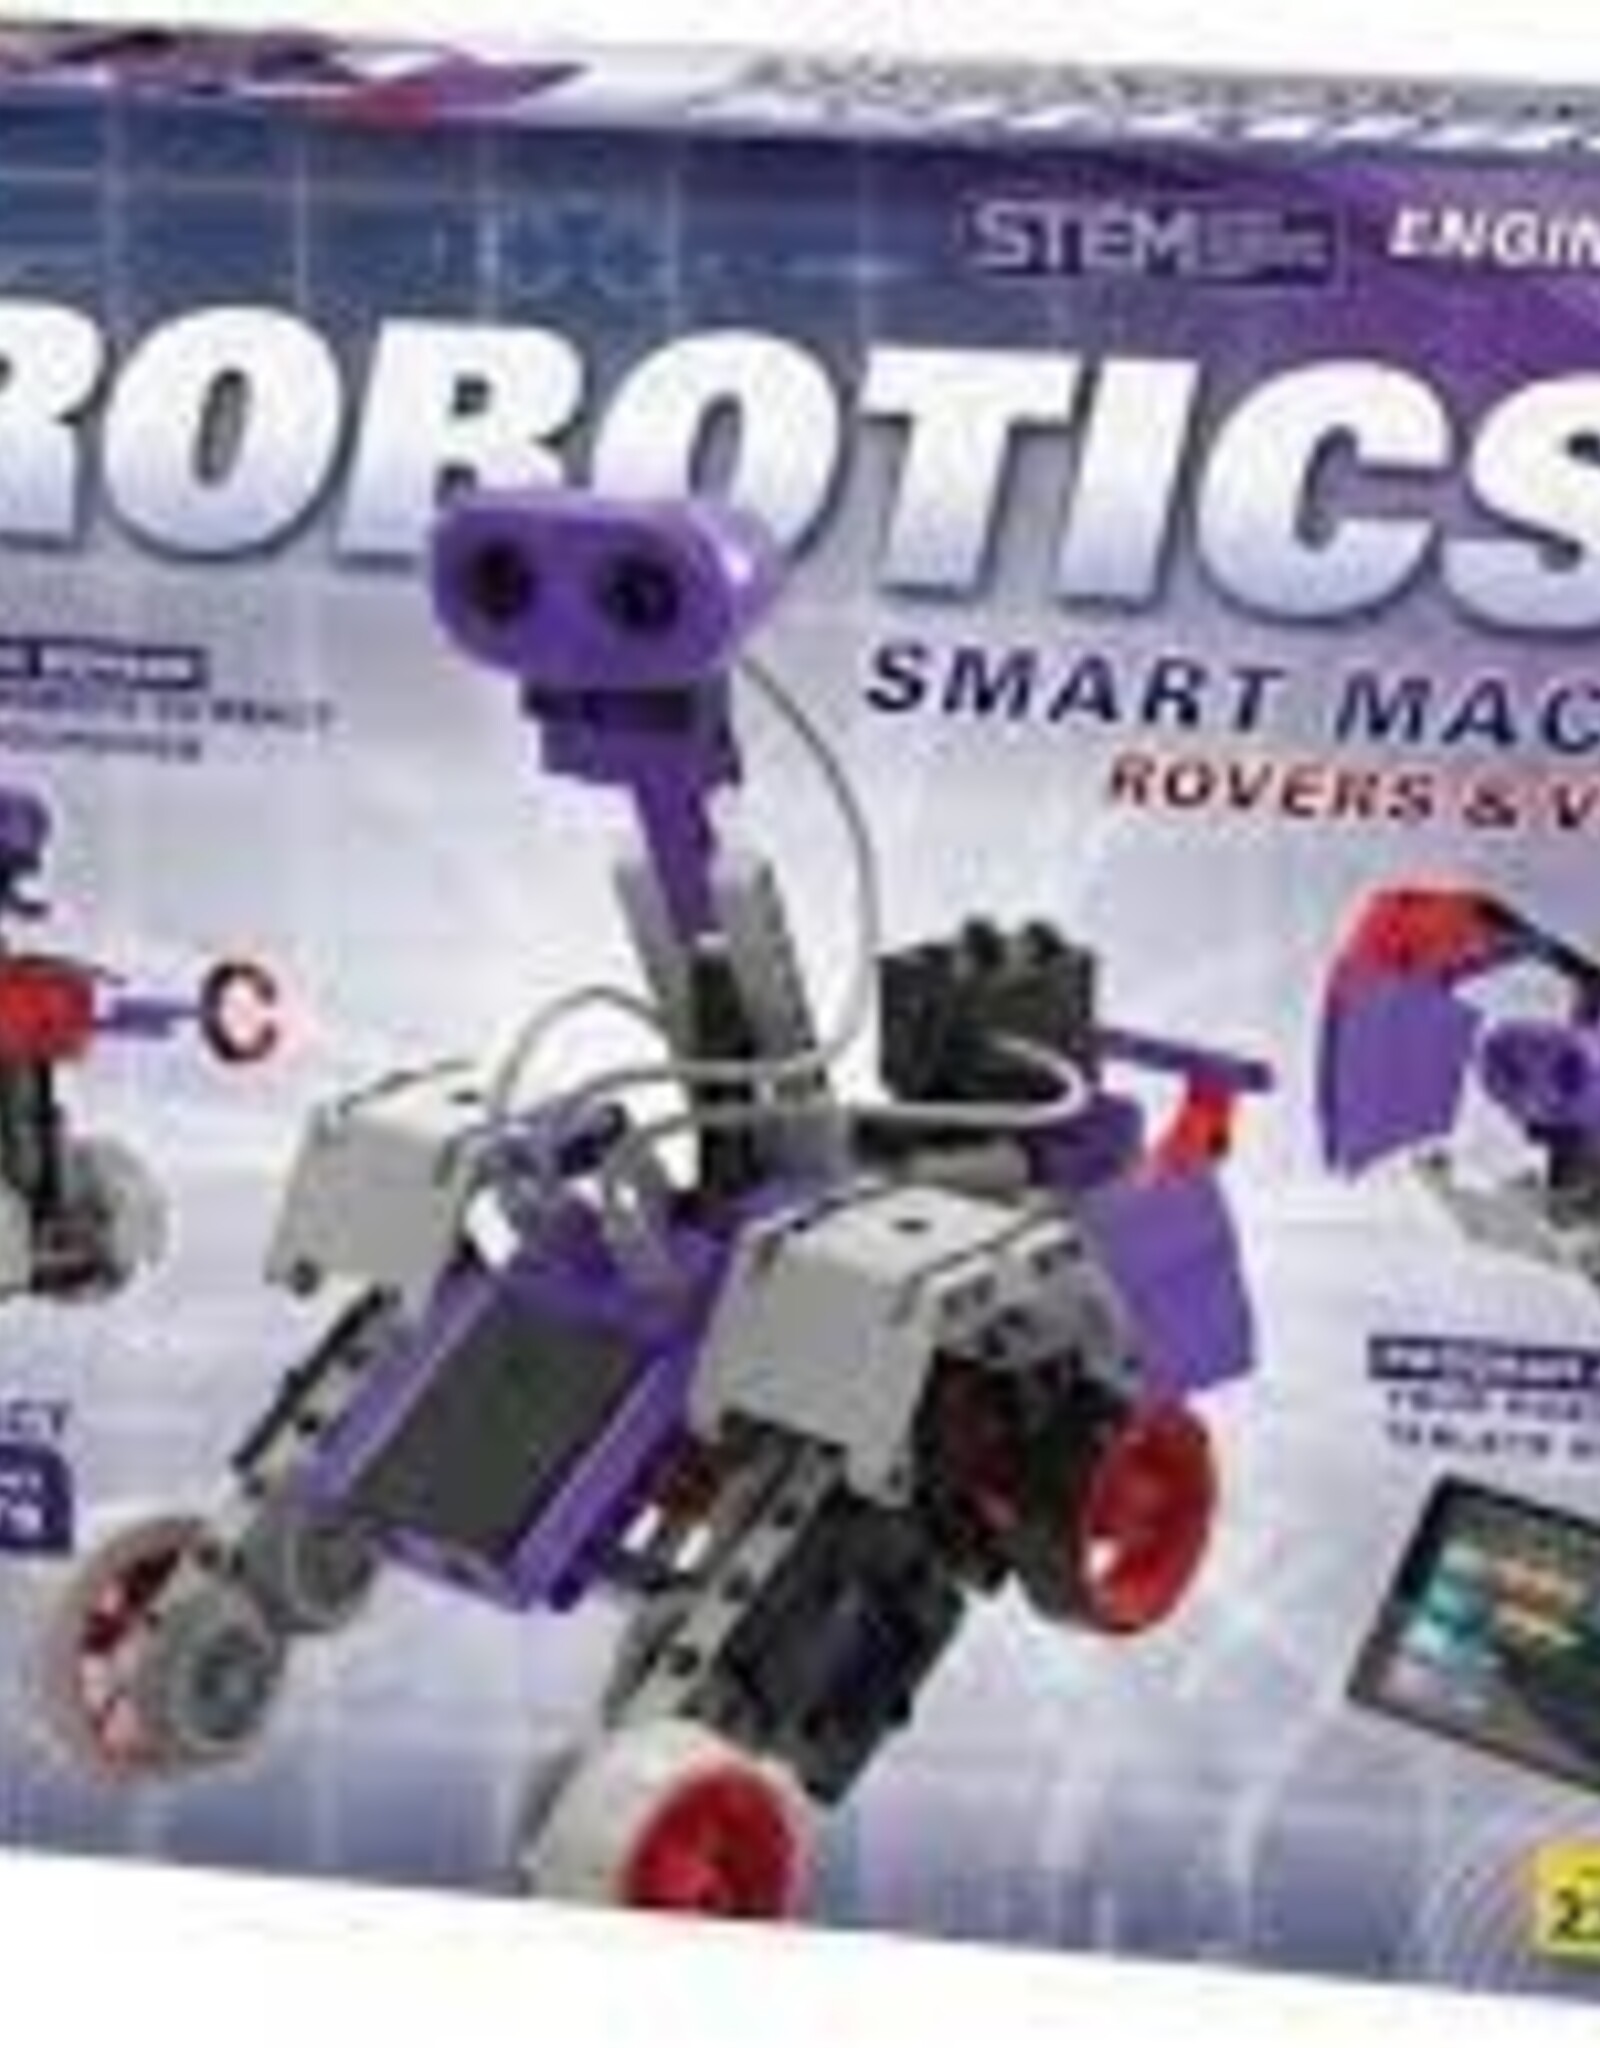 THAMES & KOSMOS Smart Machines - Rovers & Vehicles